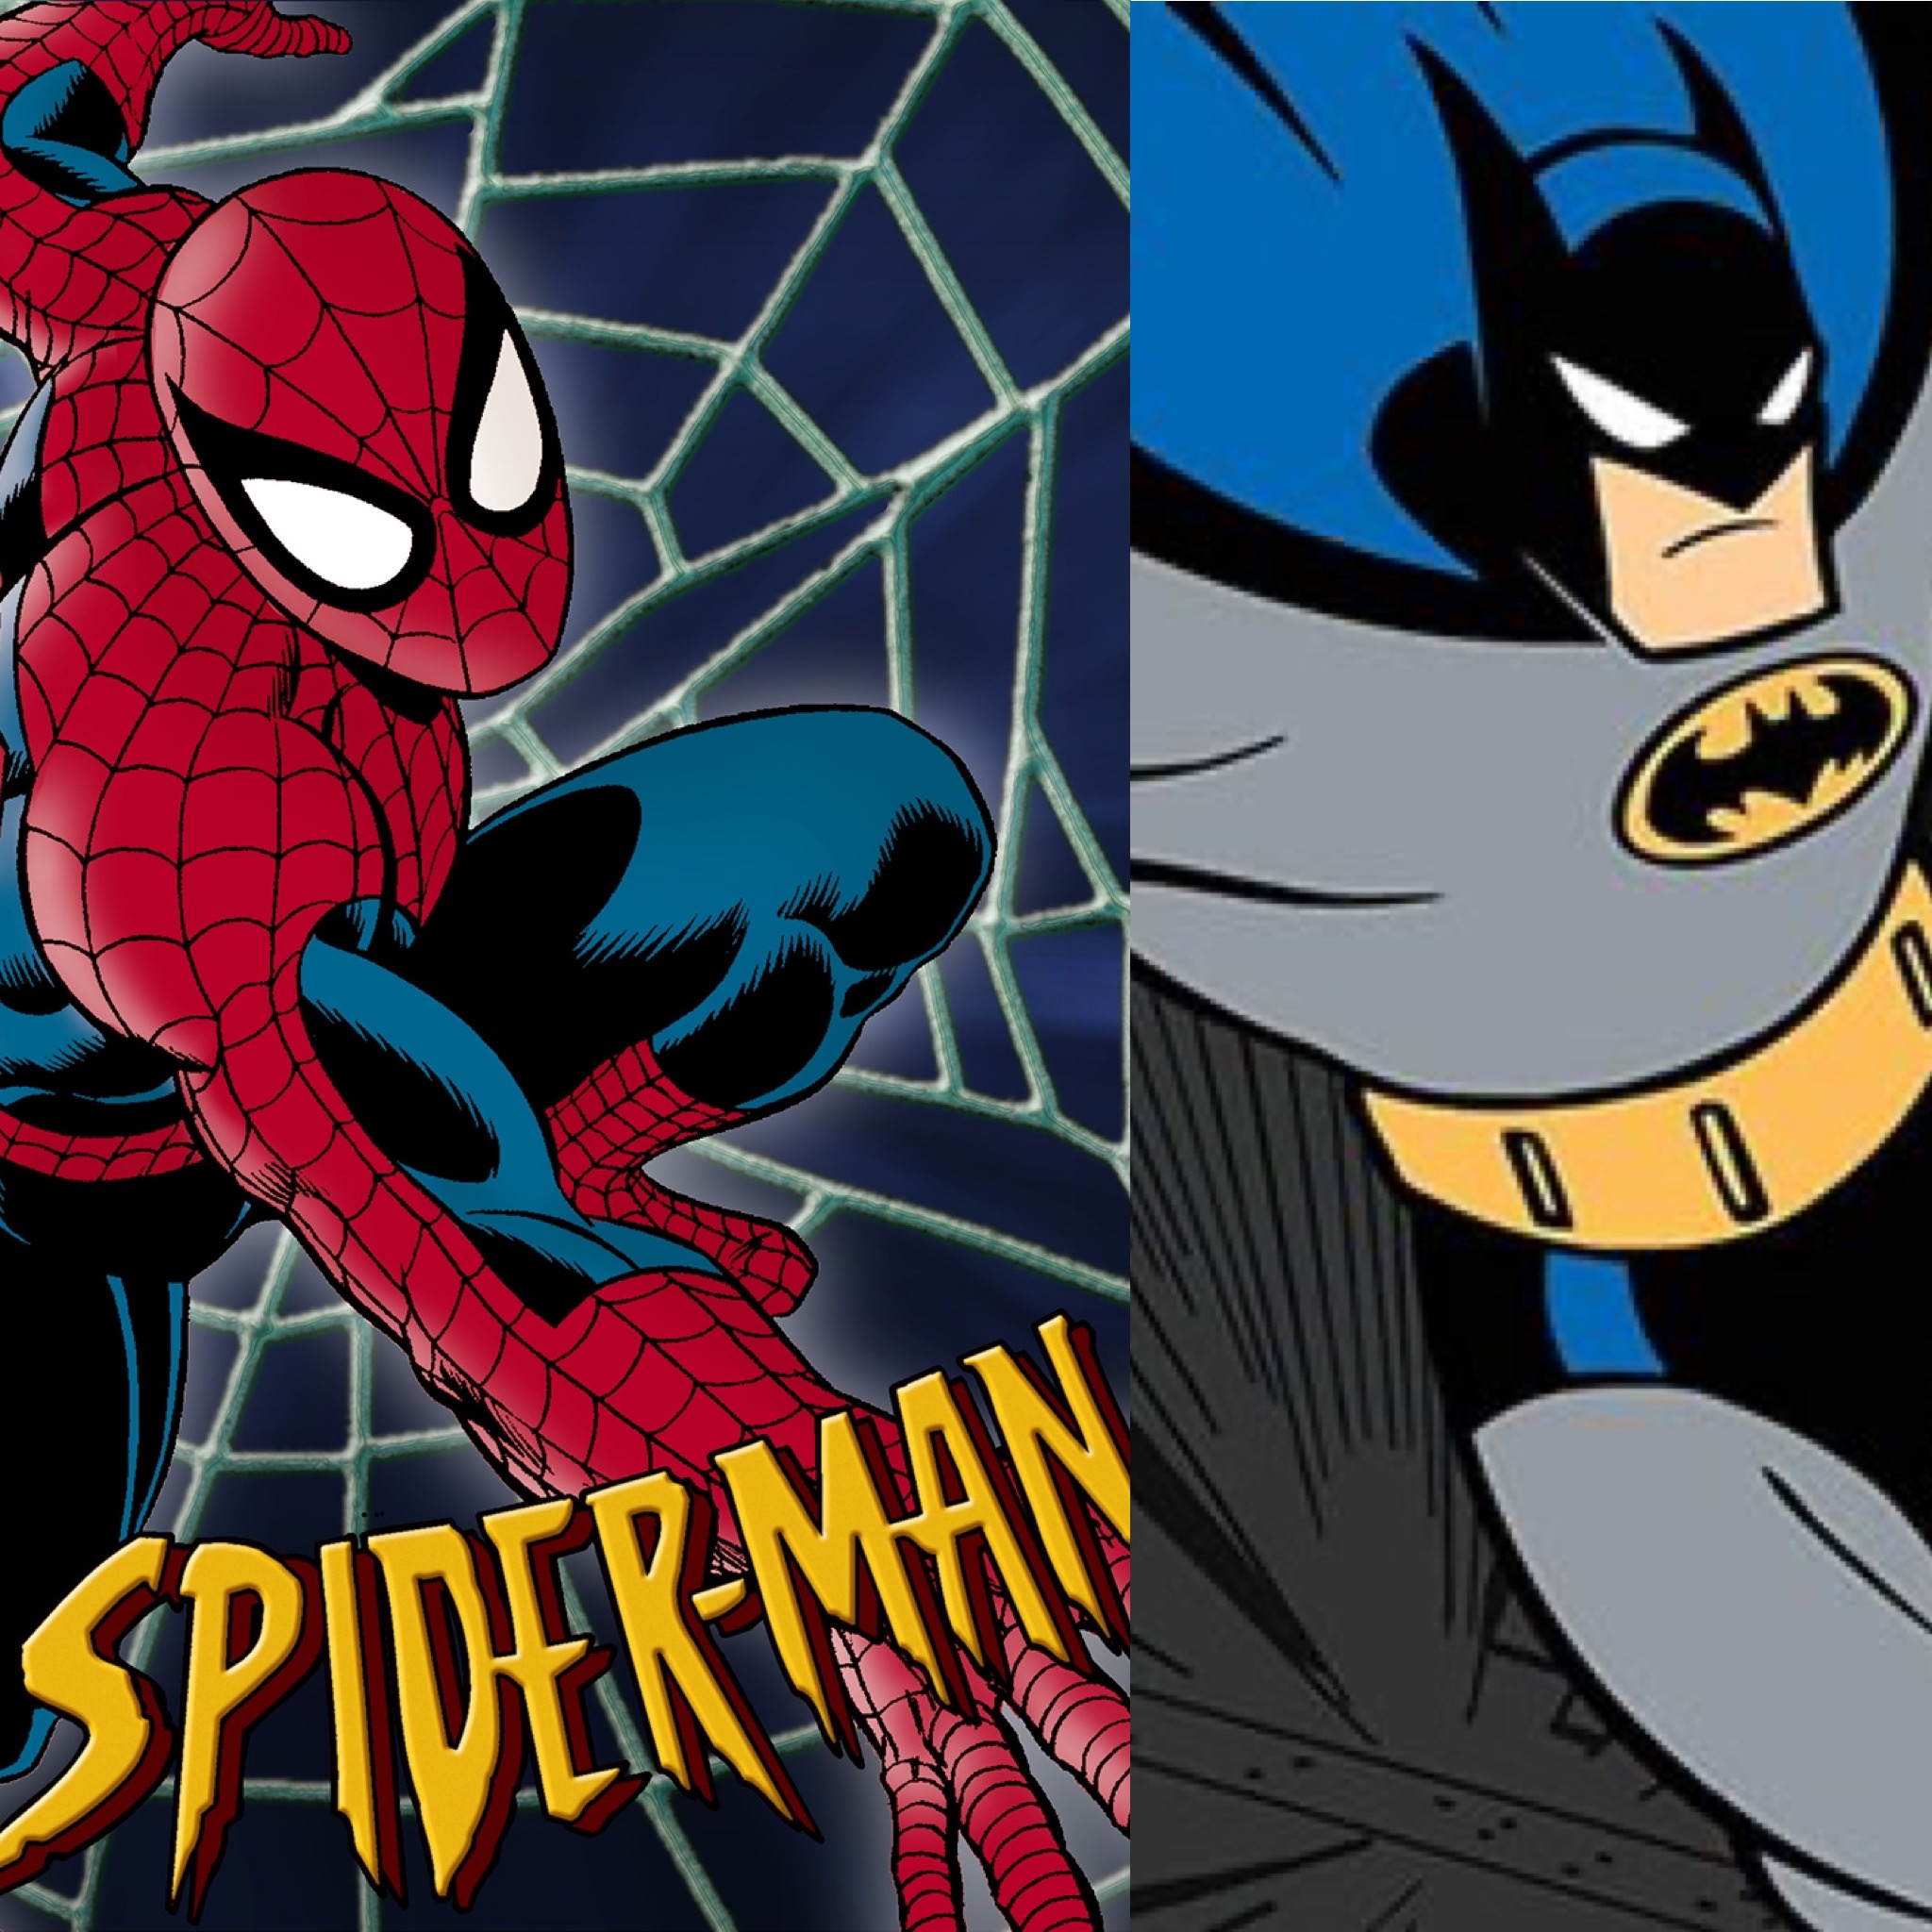 Batman vs Spiderman by Yingcartoonman on DeviantArt